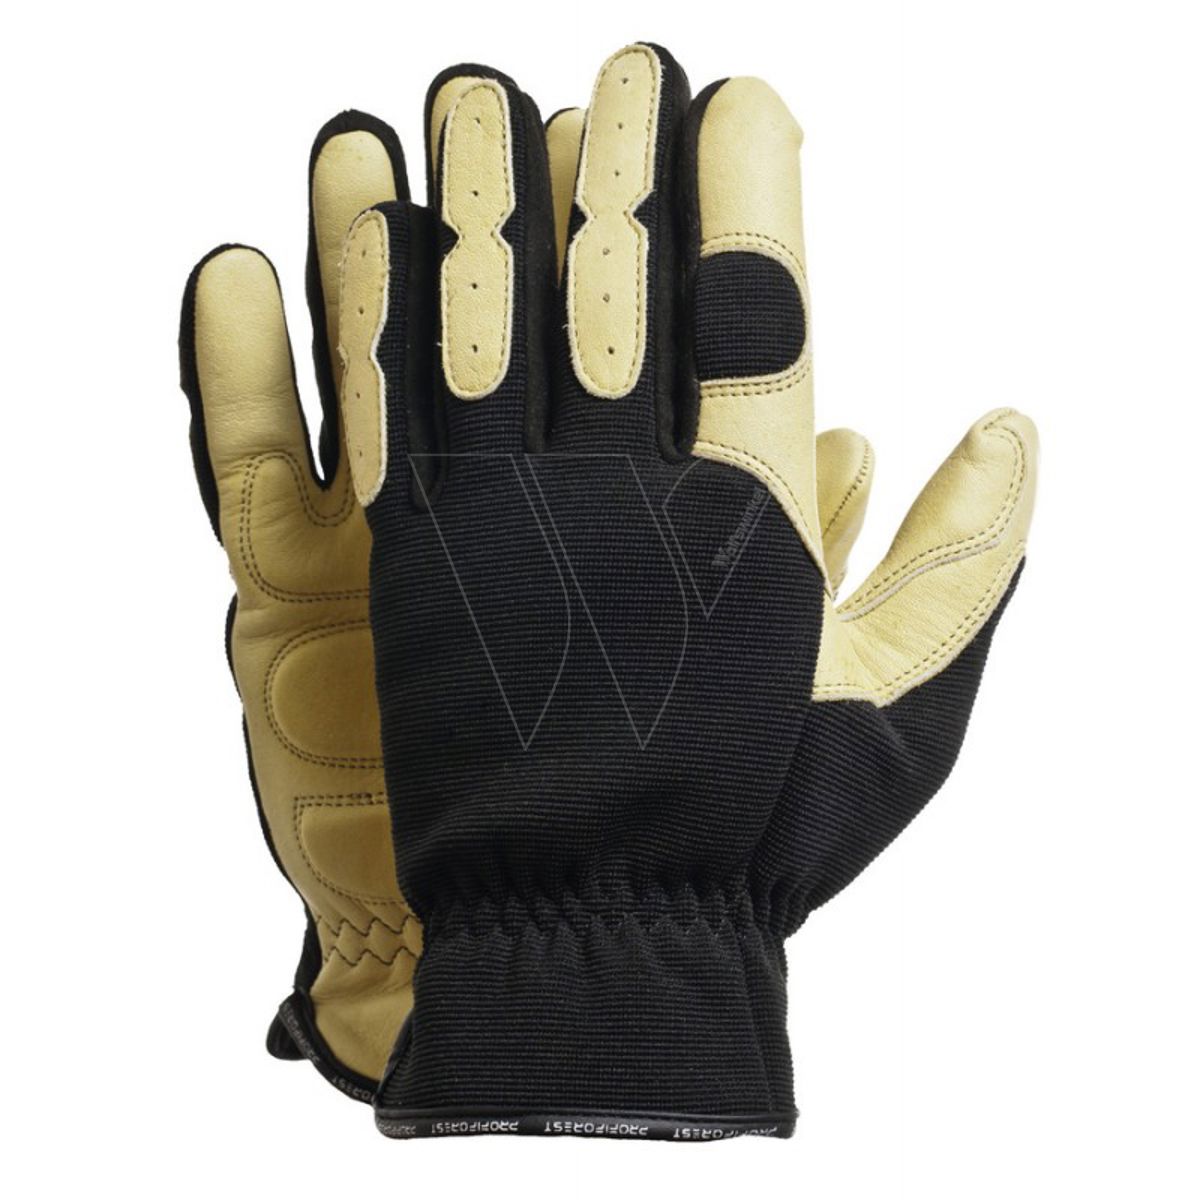 Profiforest antivibration glove 11